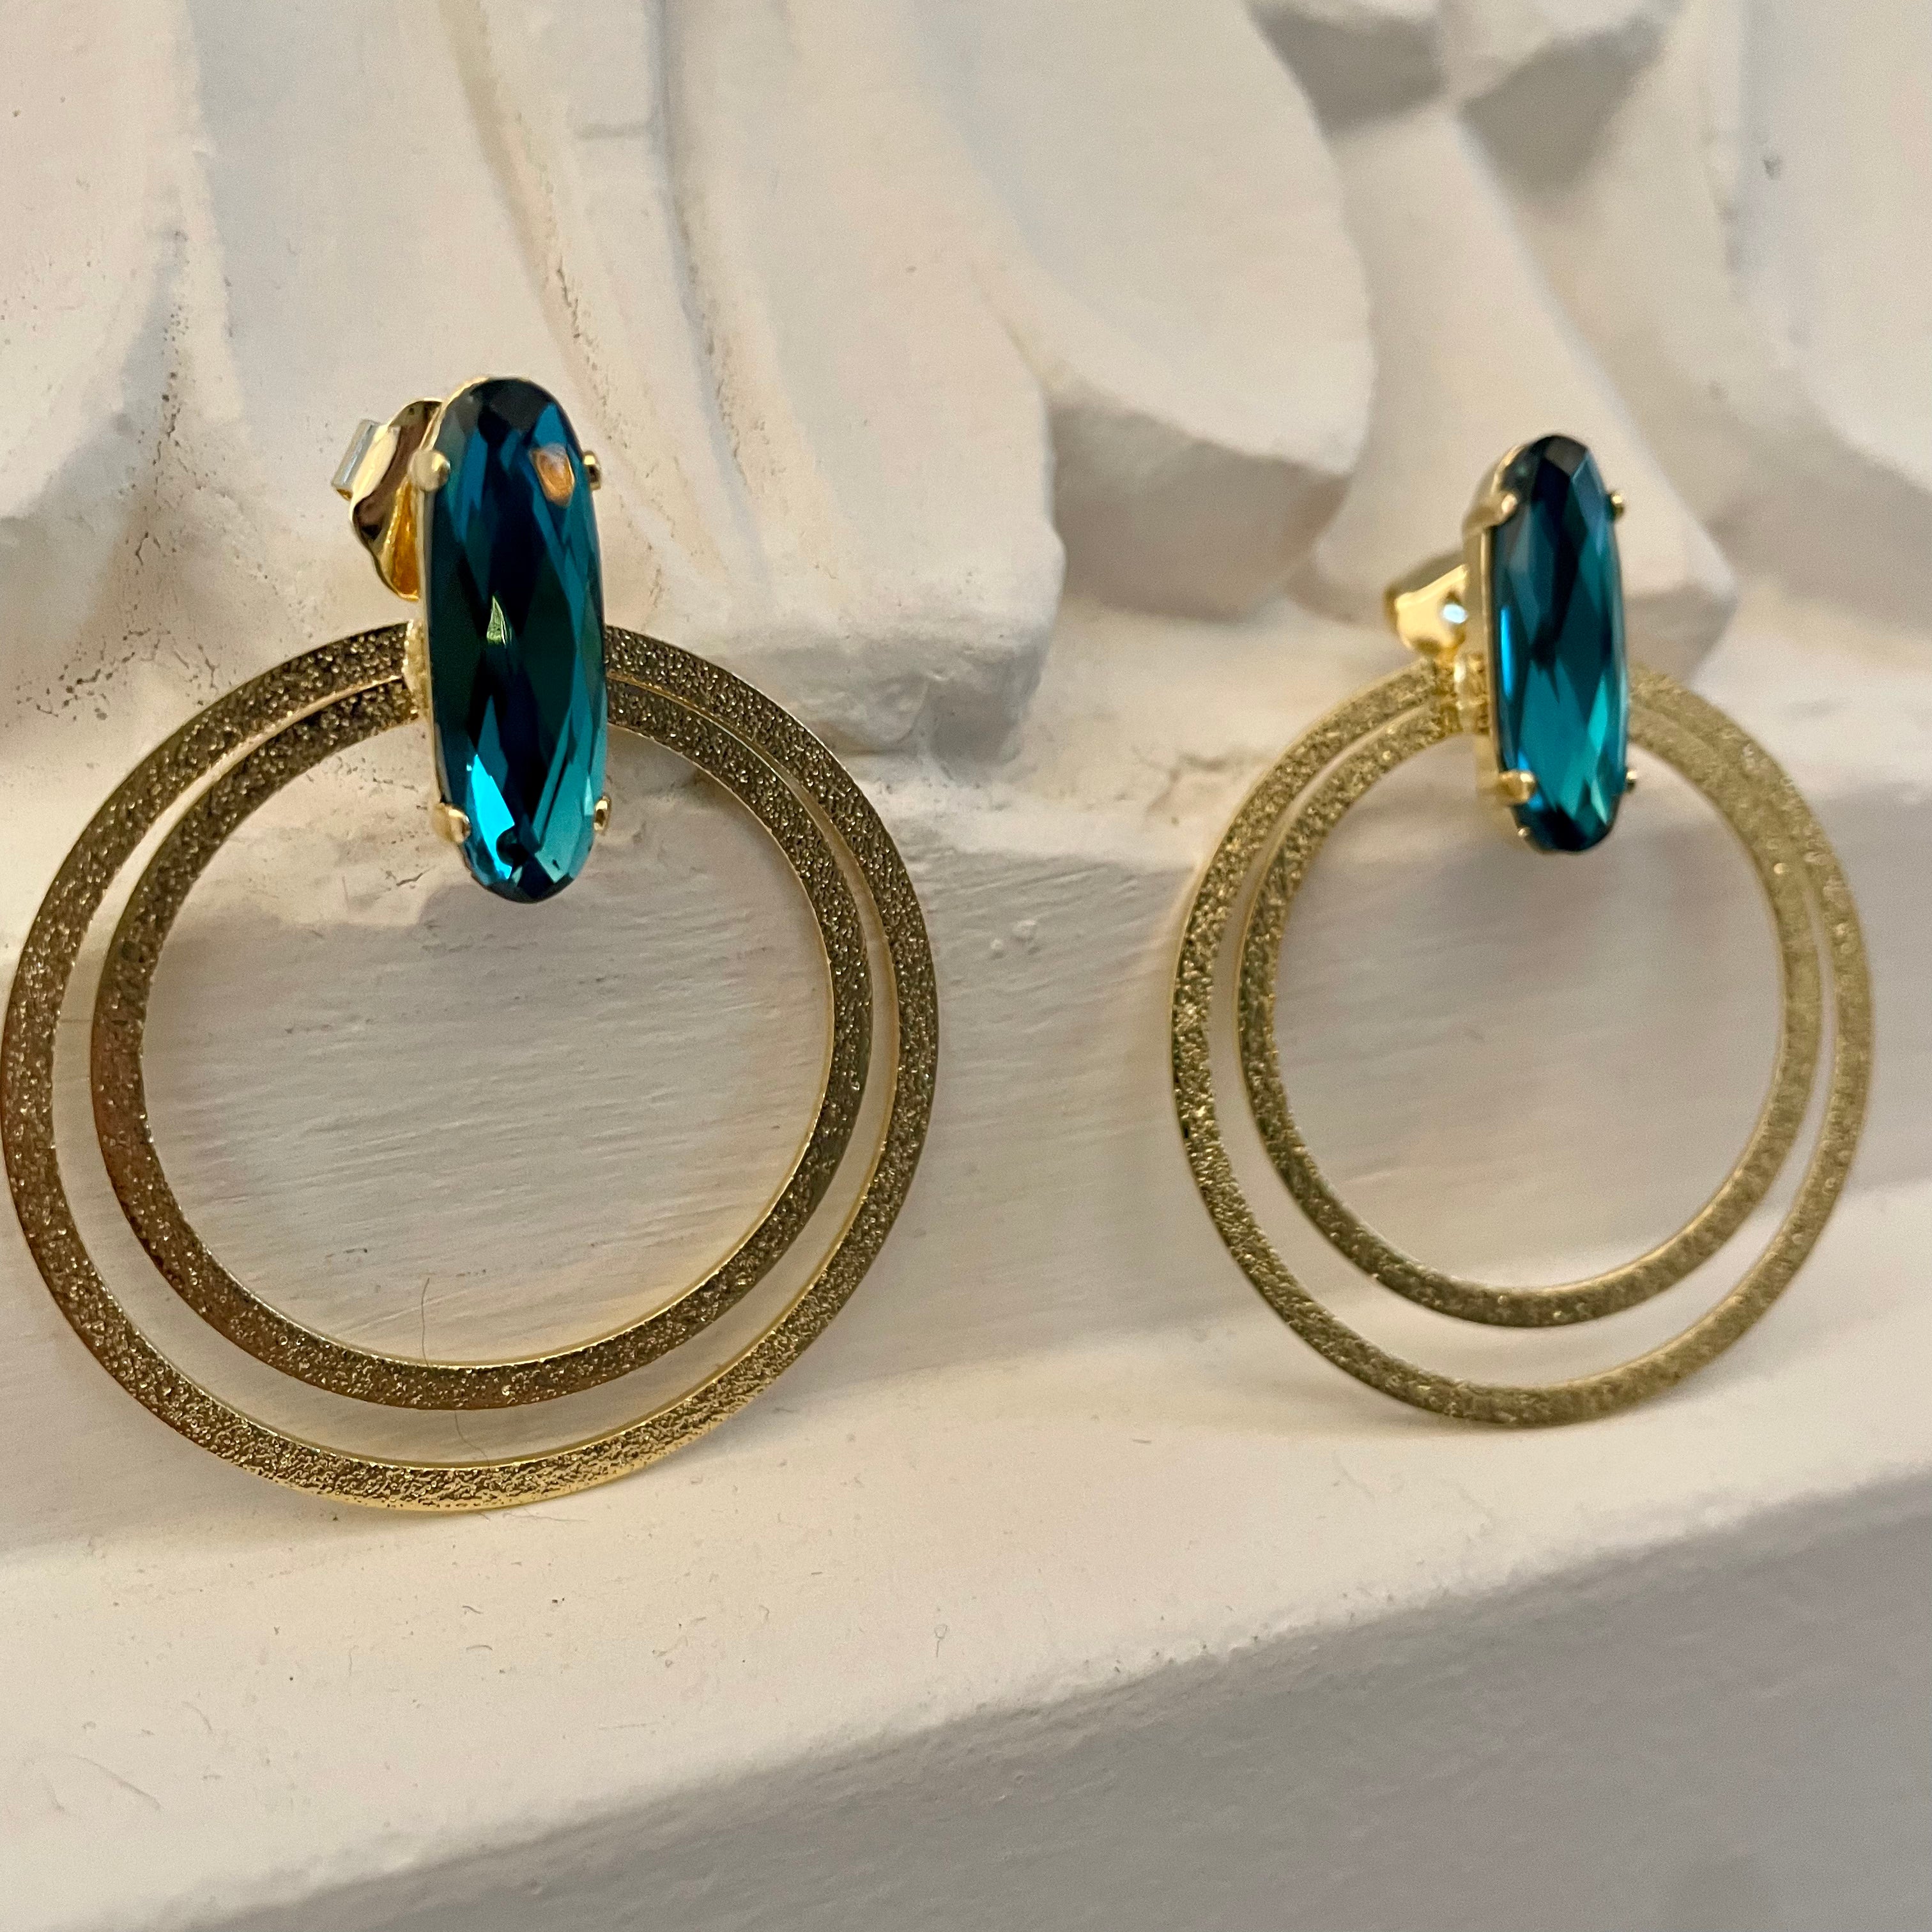 Stunning swarovski crystal earrings